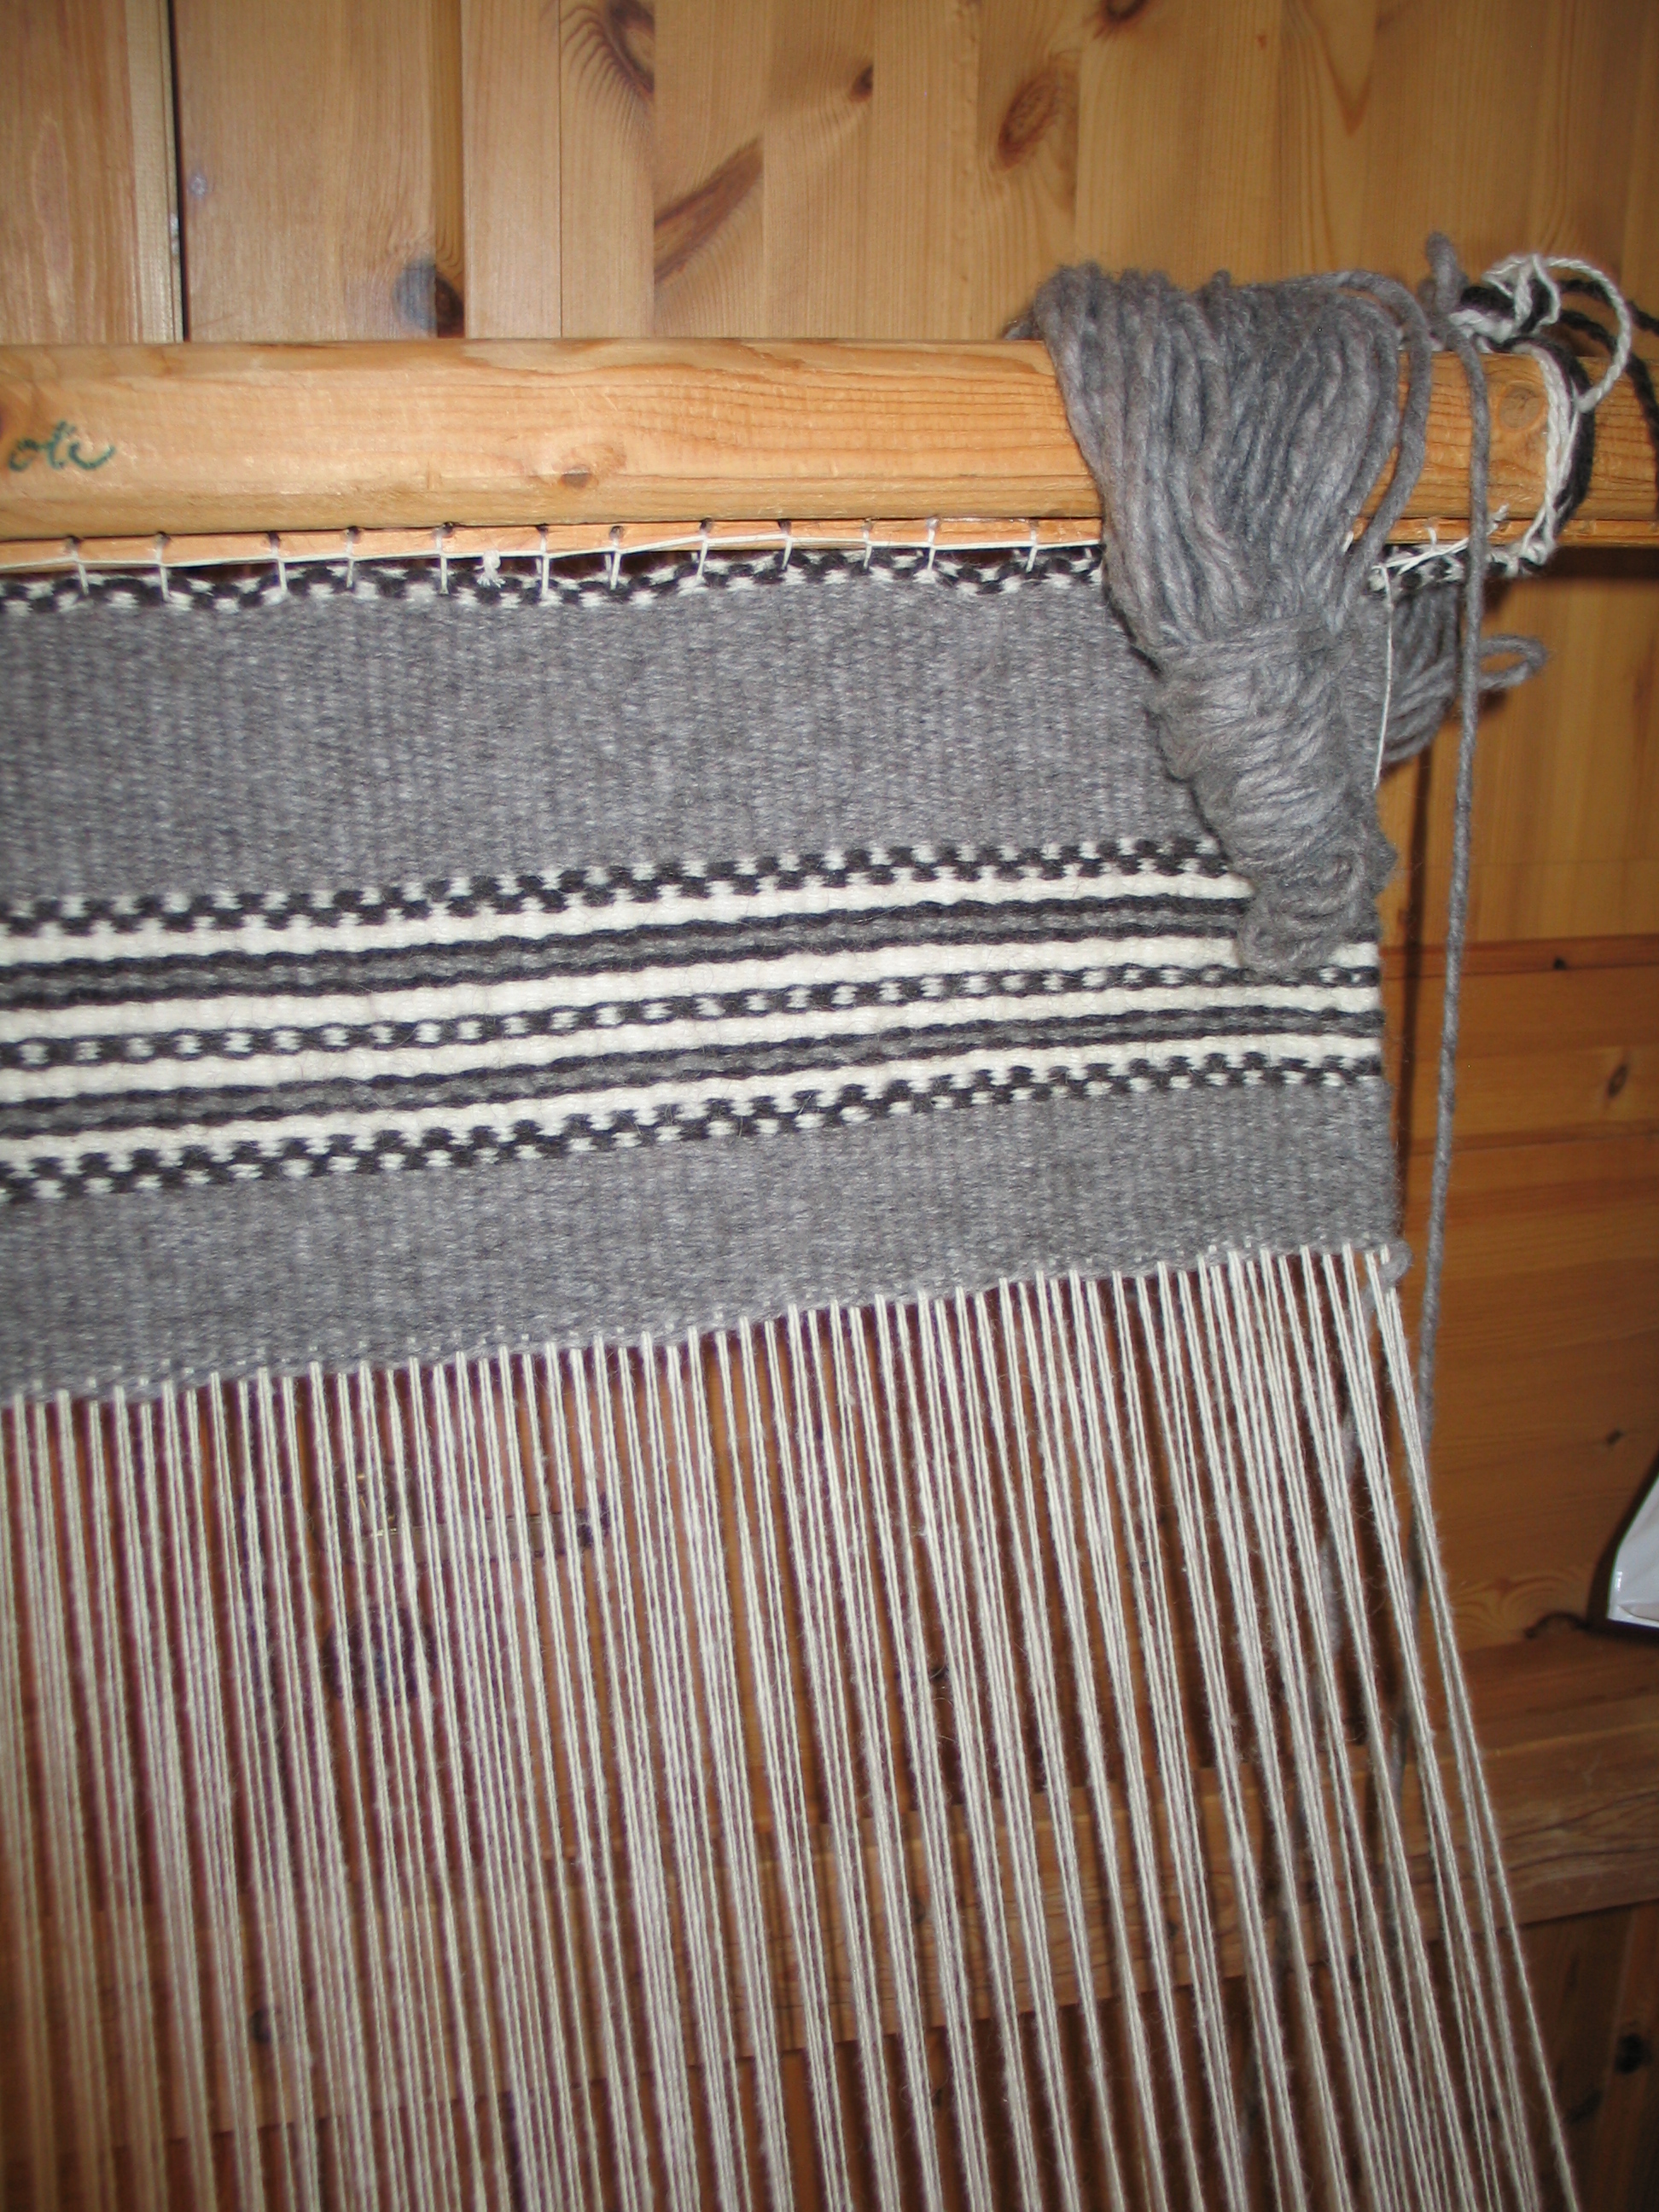 A warp weighted loom